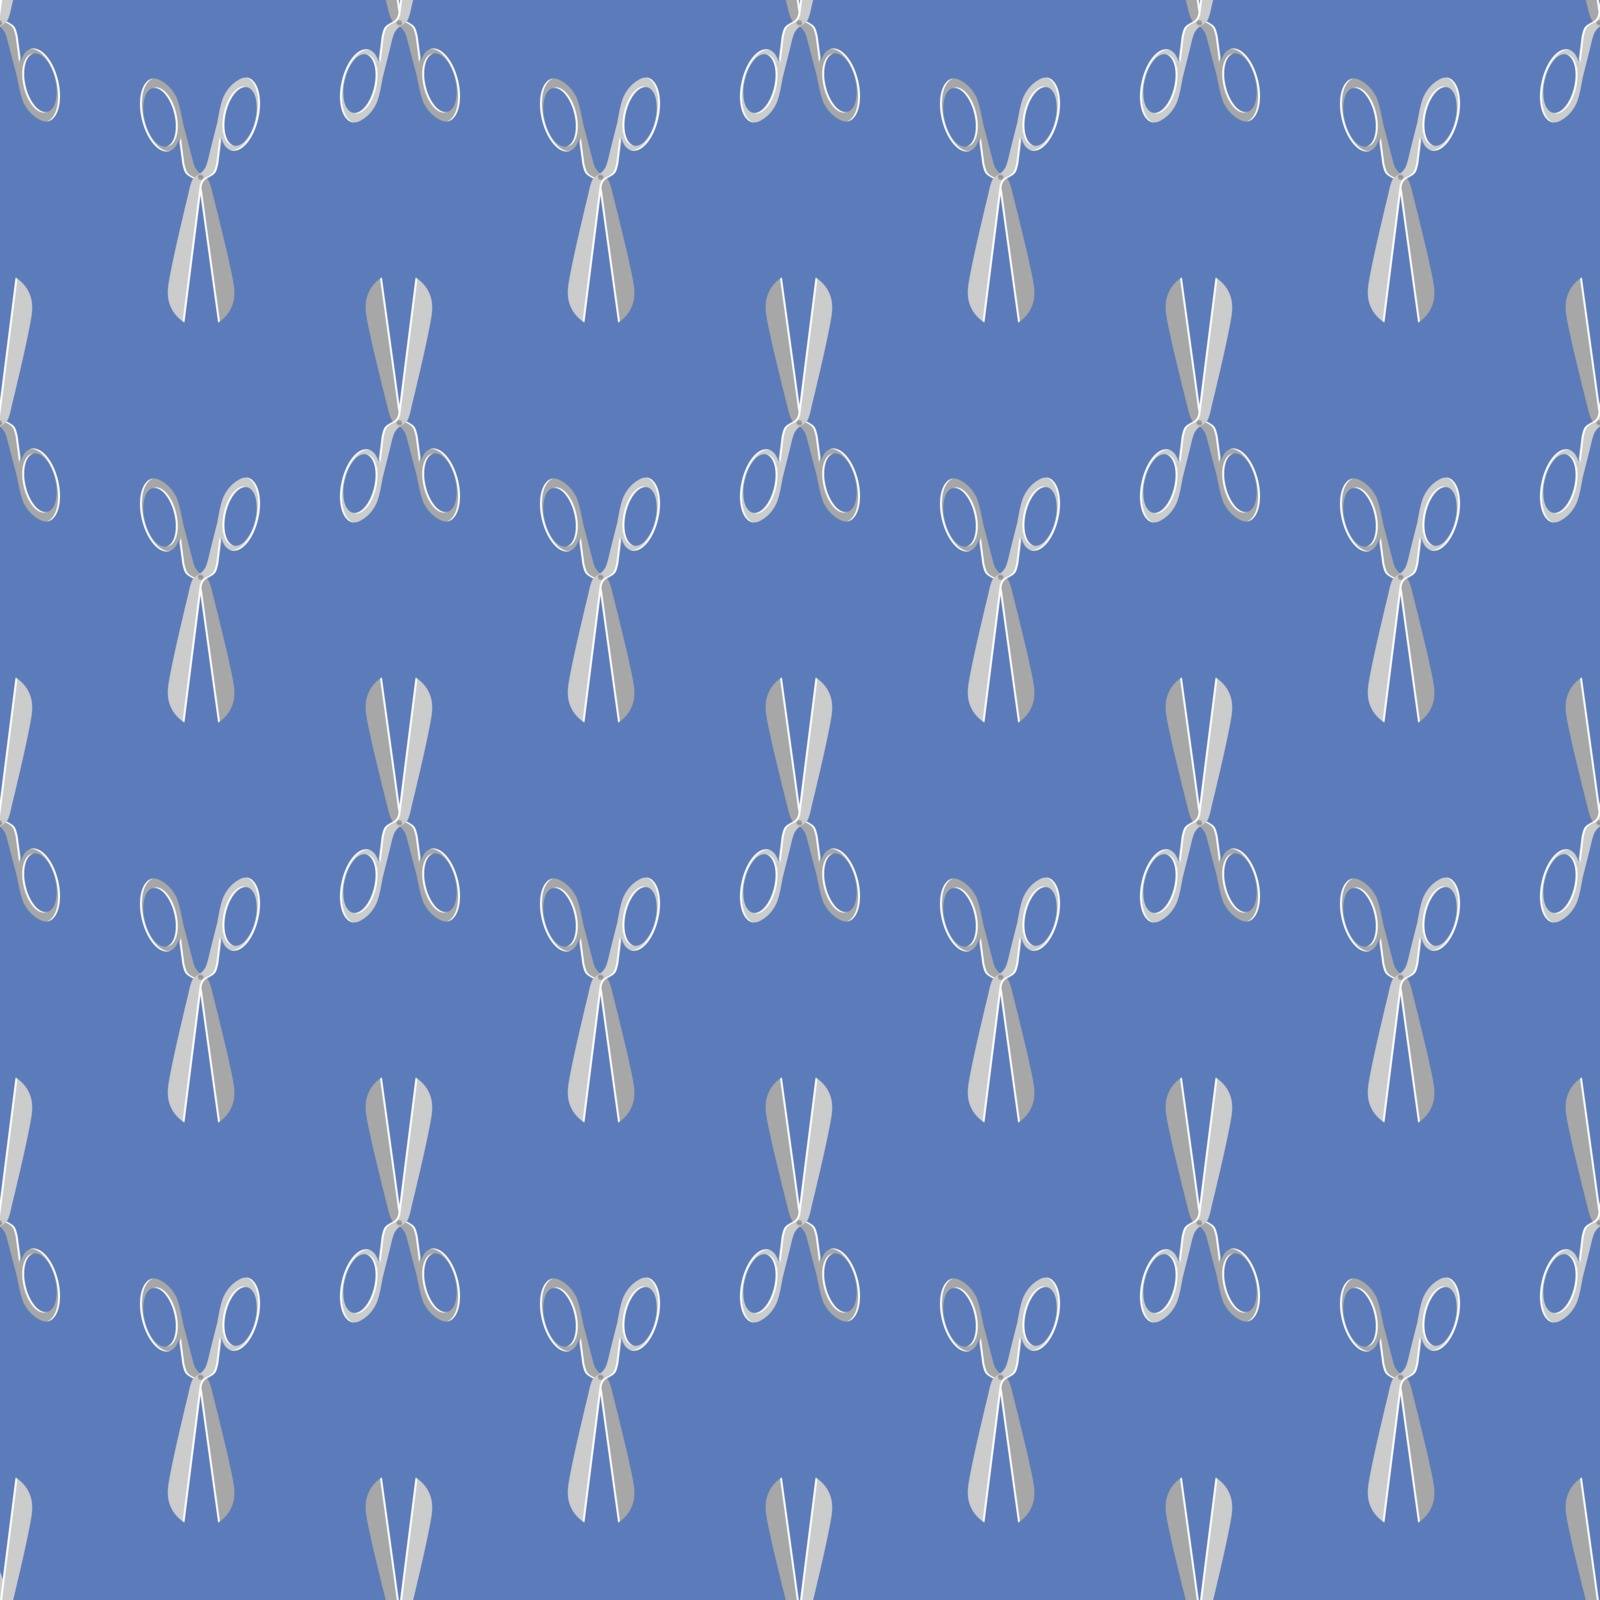 Scissors Seamless Pattern by valeo5